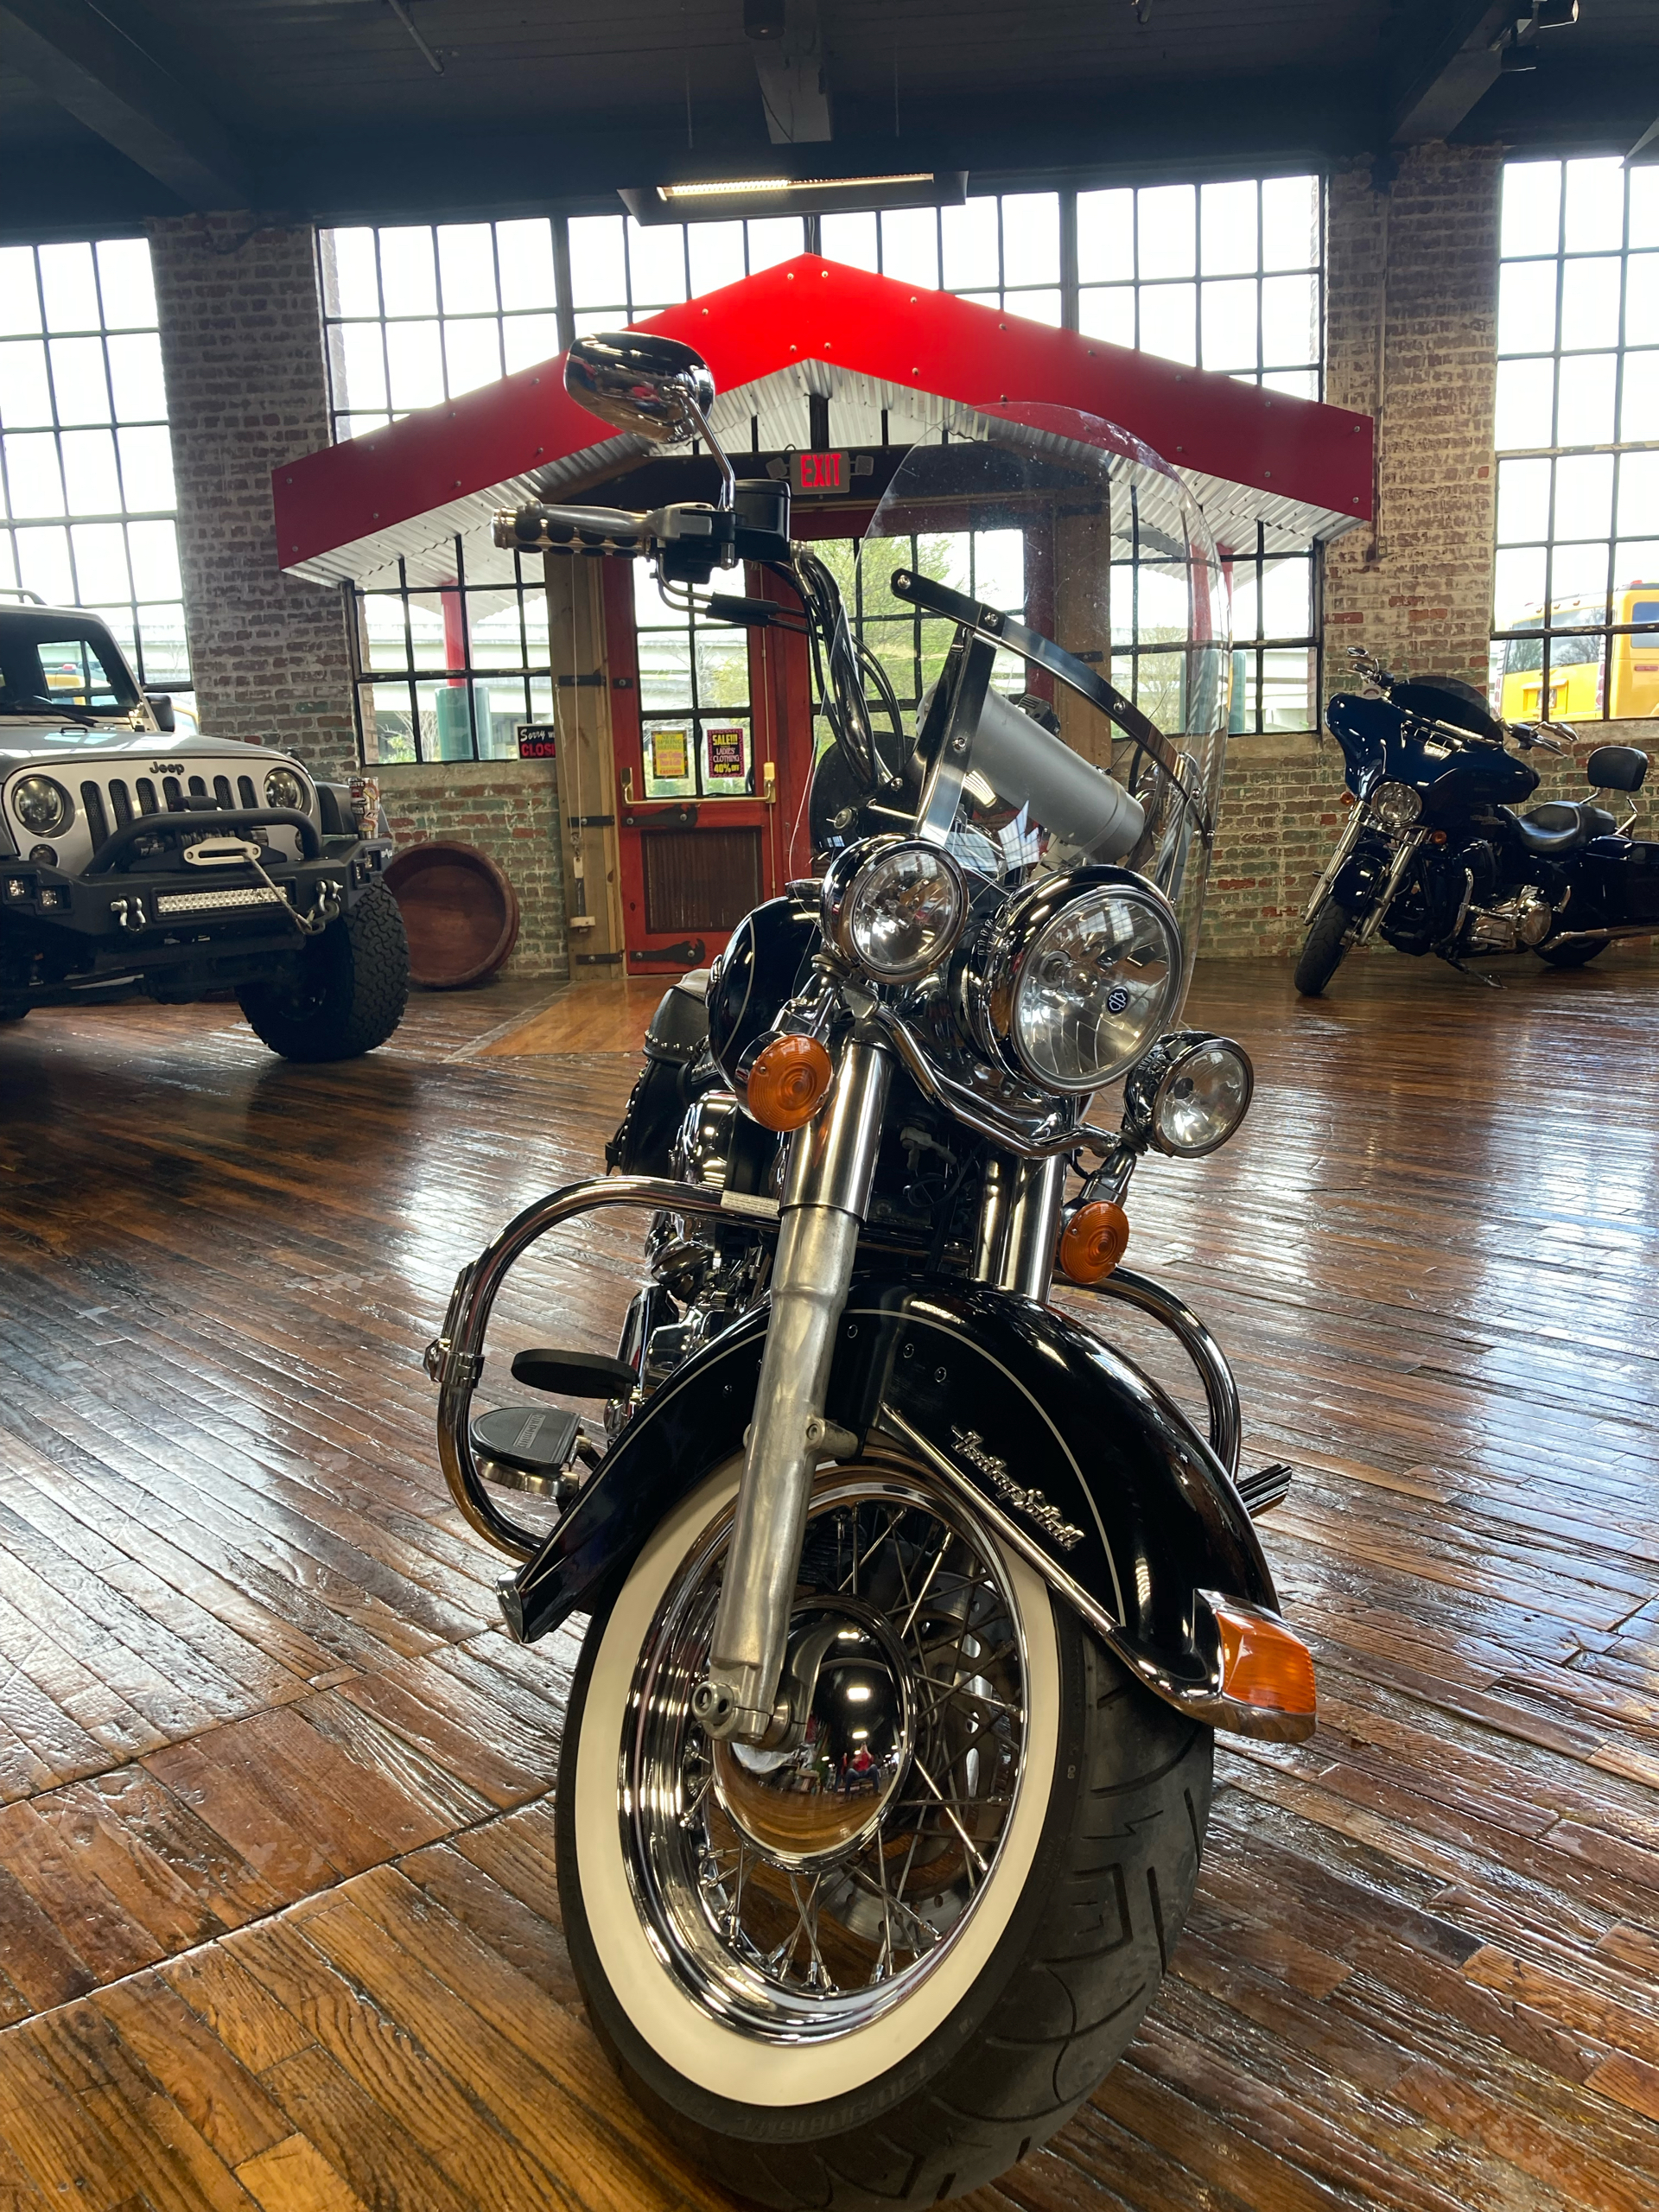 2014 Harley-Davidson Heritage Softail® Classic in Laurel, Mississippi - Photo 8